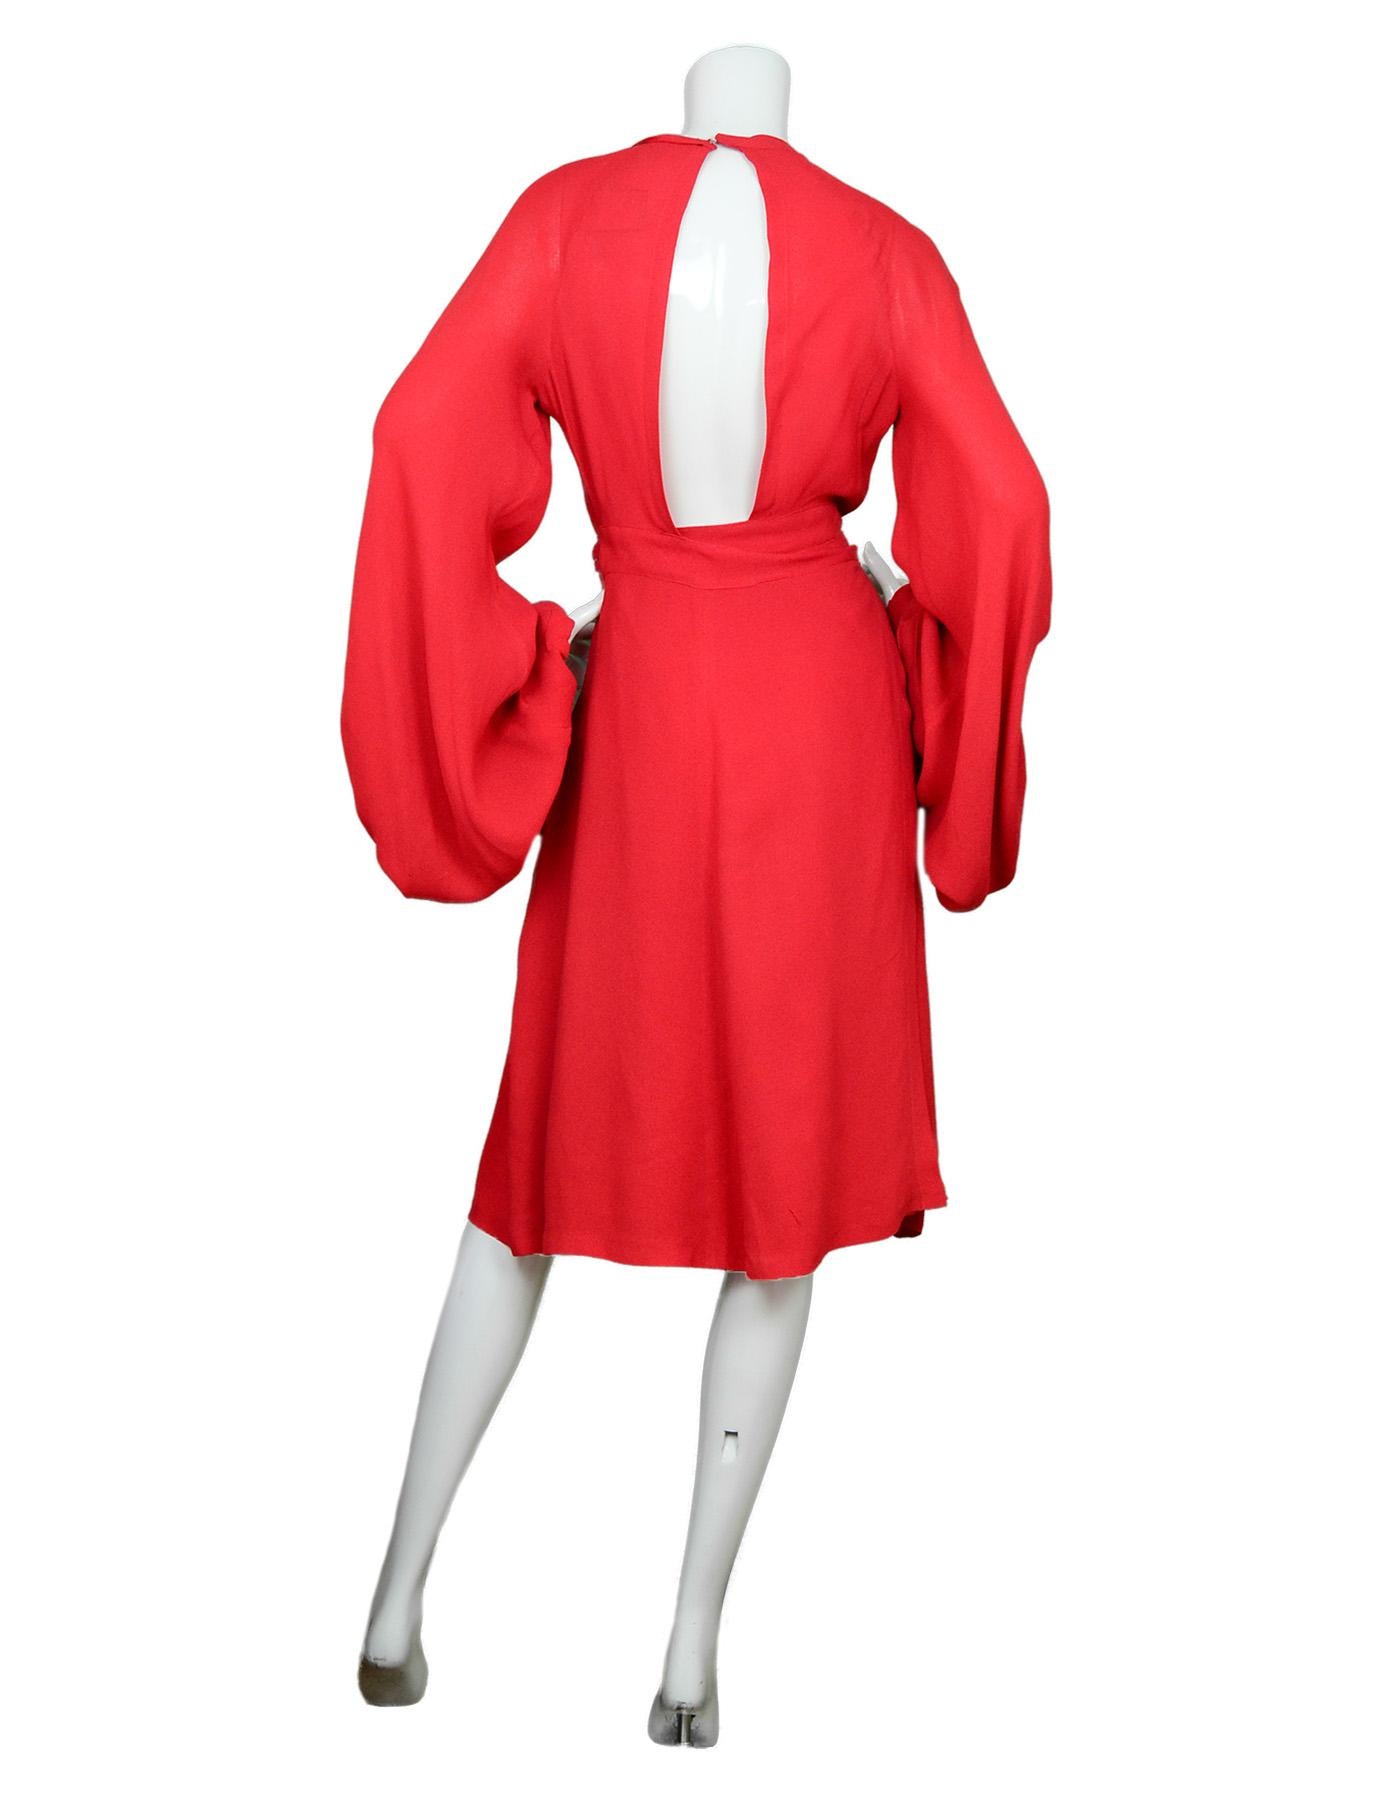 ossie clark red dress